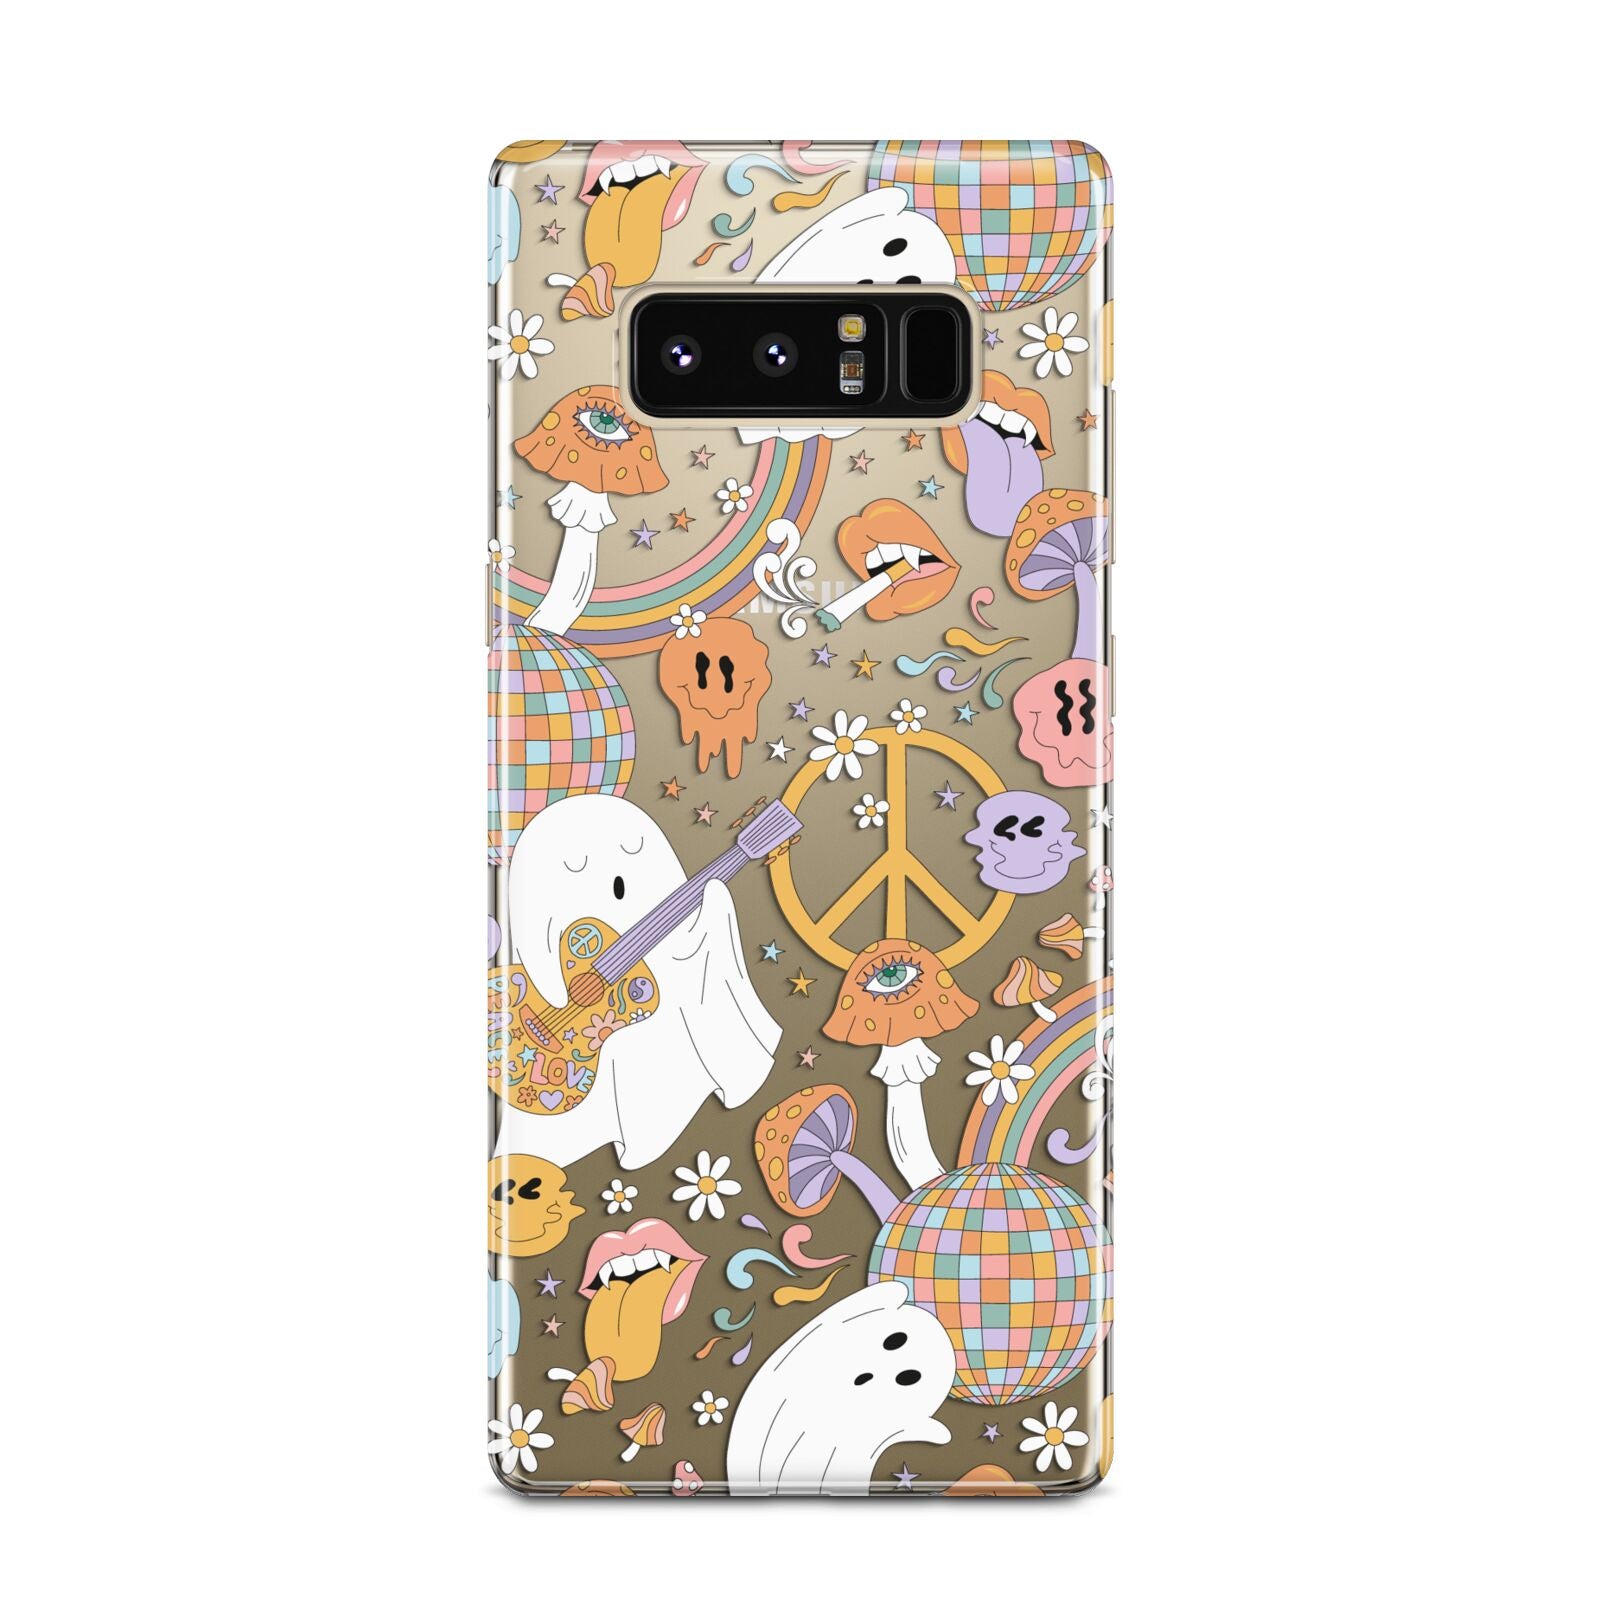 Disco Ghosts Samsung Galaxy Note 8 Case